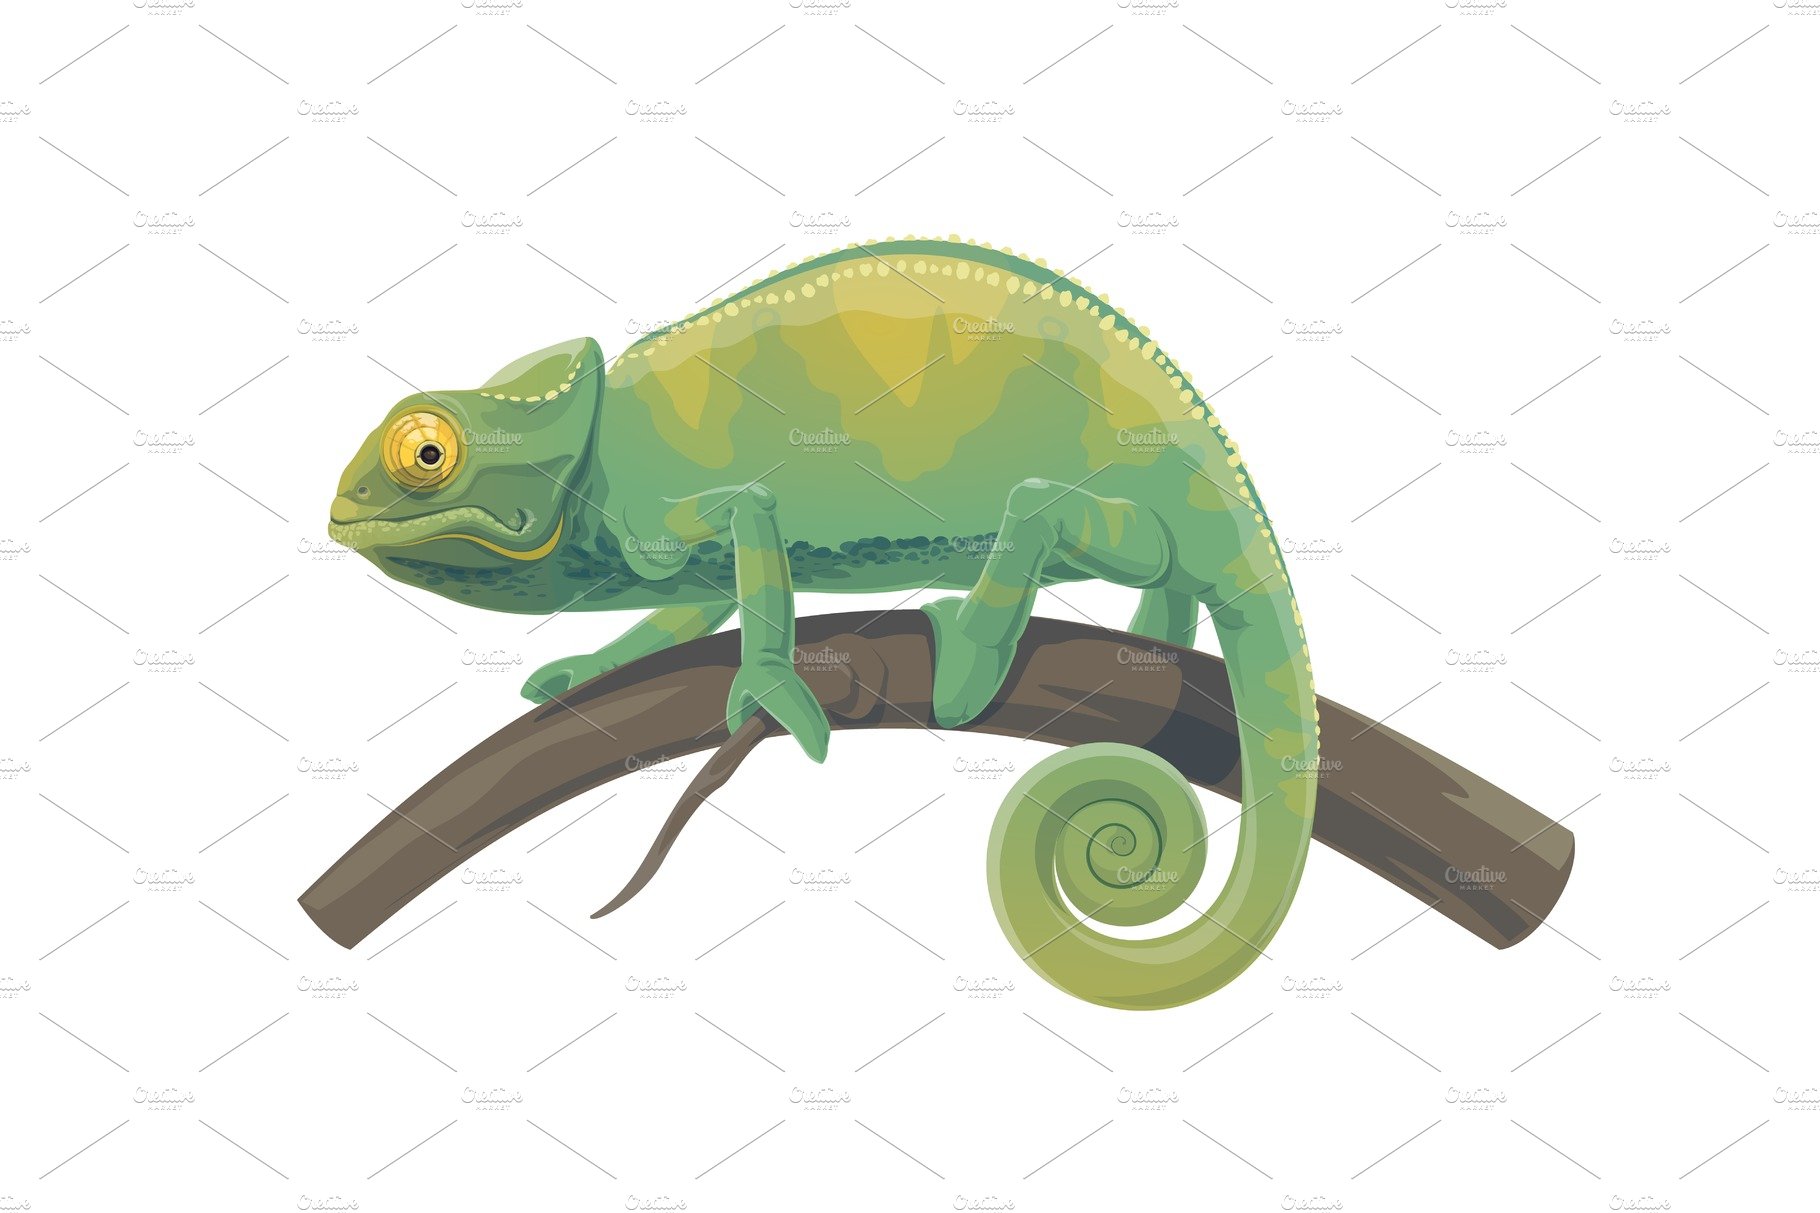 Chameleon lizard reptile animal cover image.